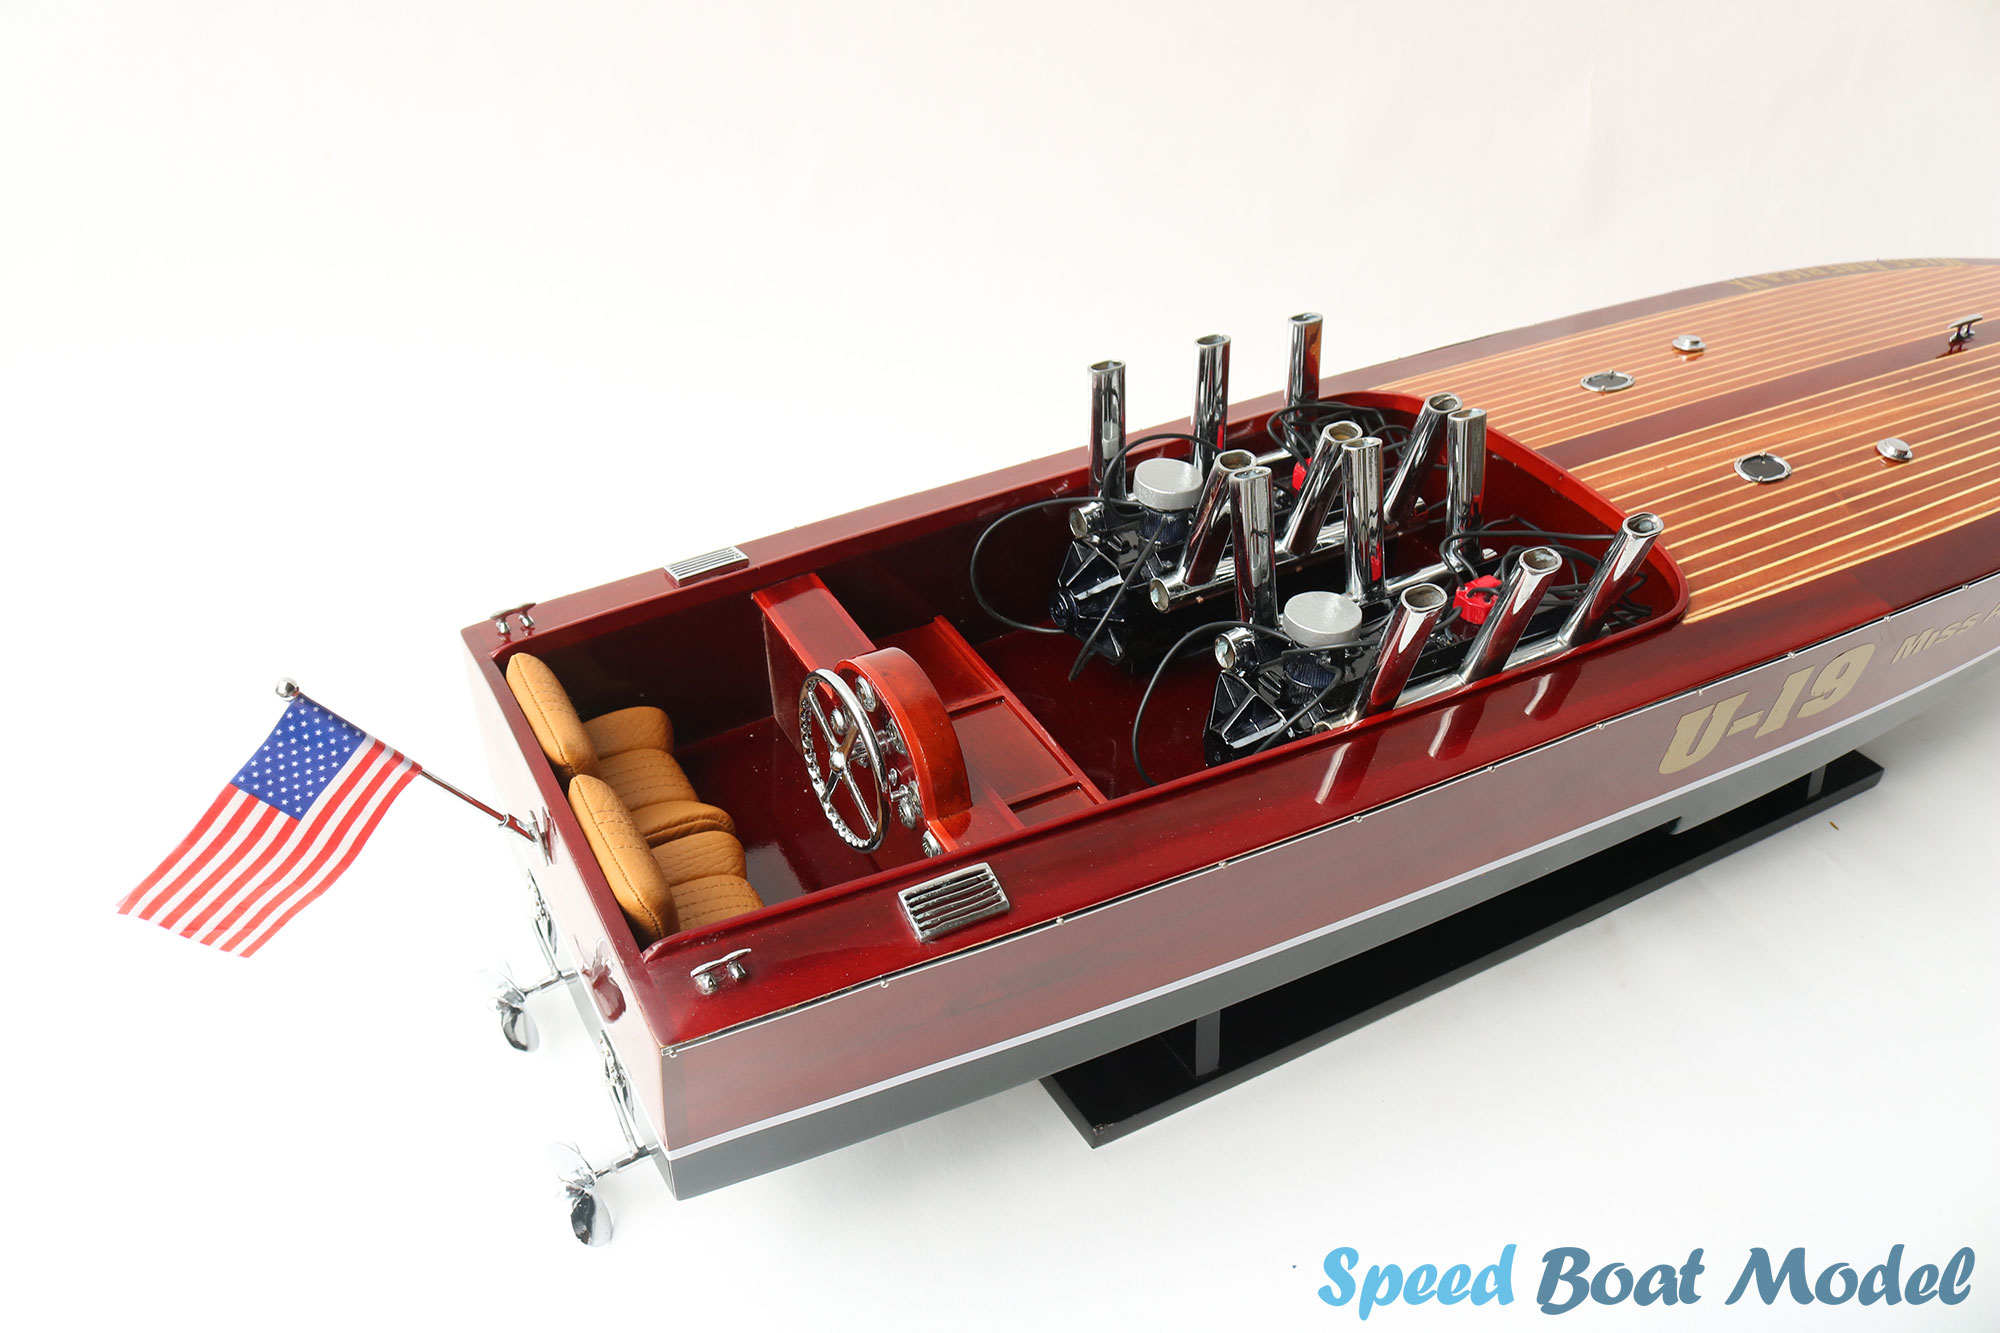 Miss America Ix Speed Boat Model 31.5